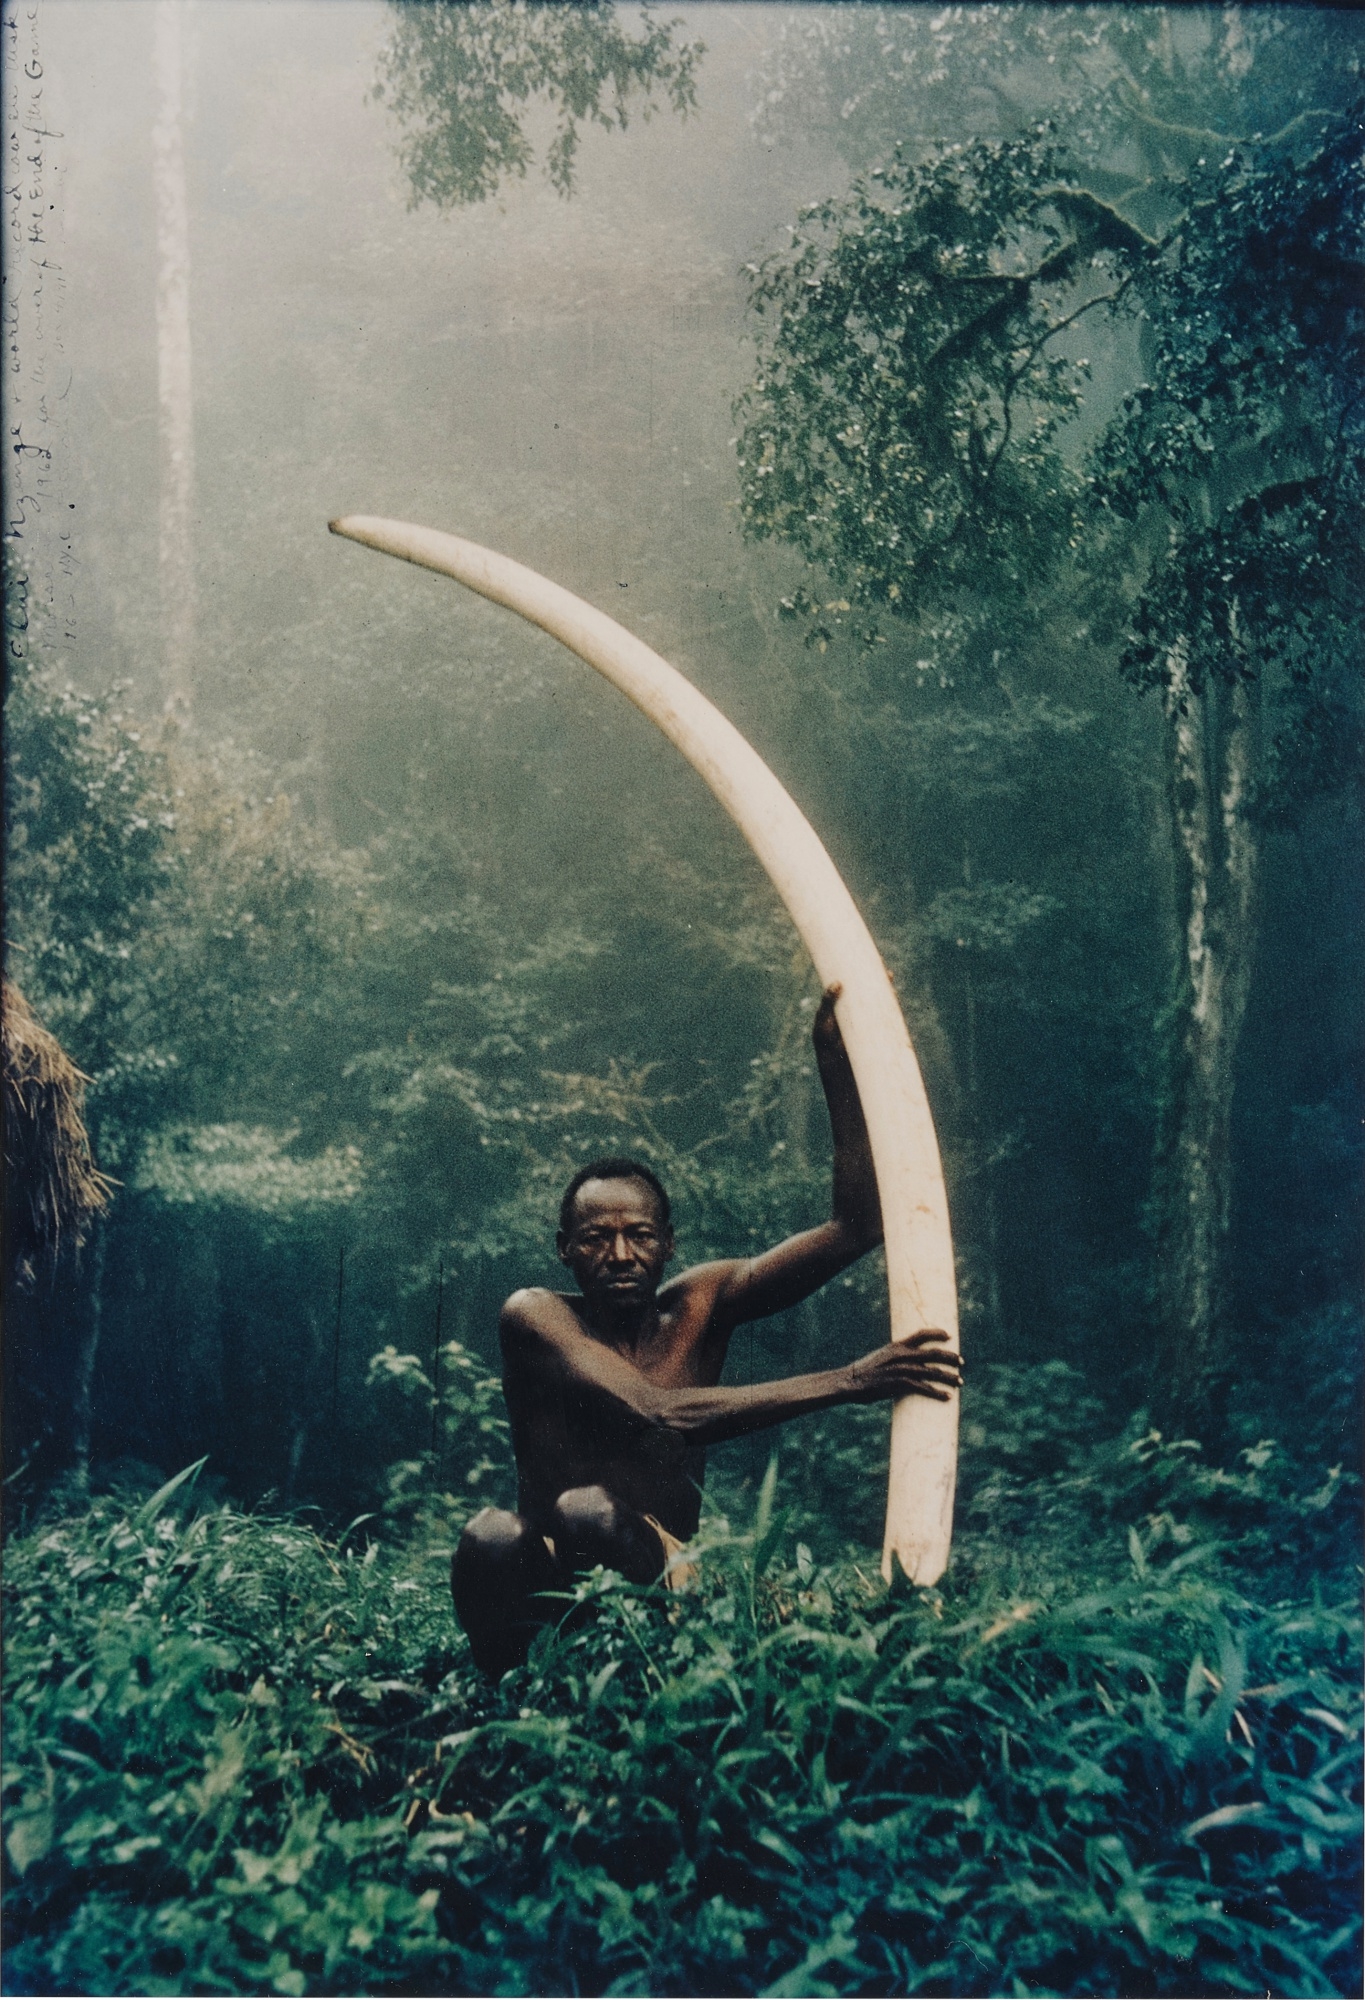 Elui Nzenge + world record cow ele tusk, Marasabit - Peter Beard